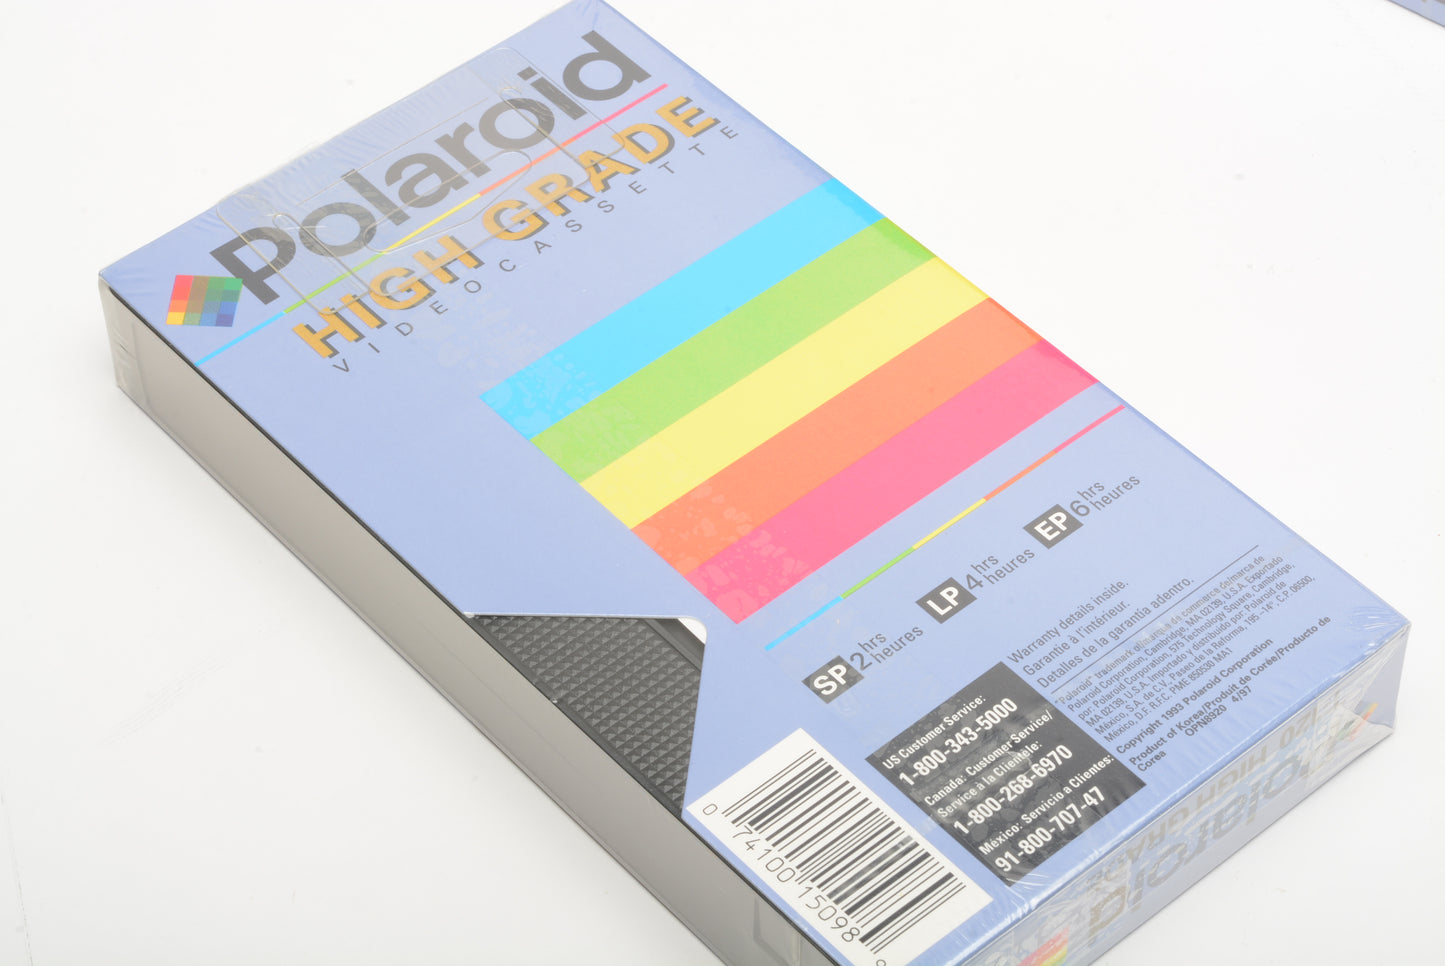 7X Polaroid T-120 High Grade VHS tapes - New - Sealed